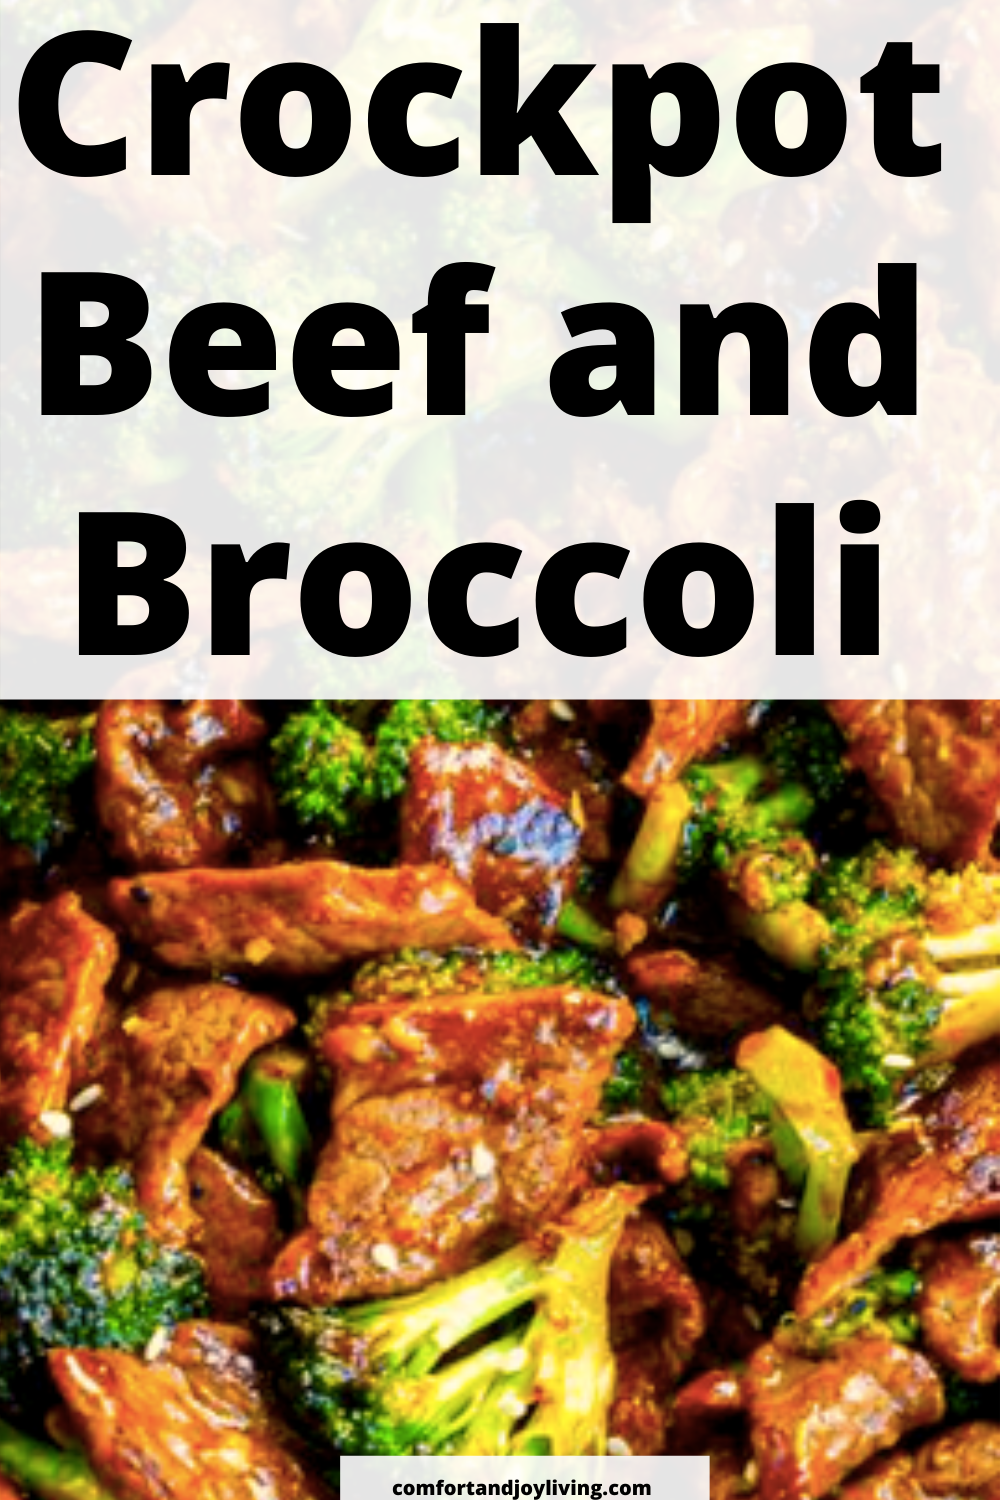 Crockpot-Beef-and-Broccoli.png